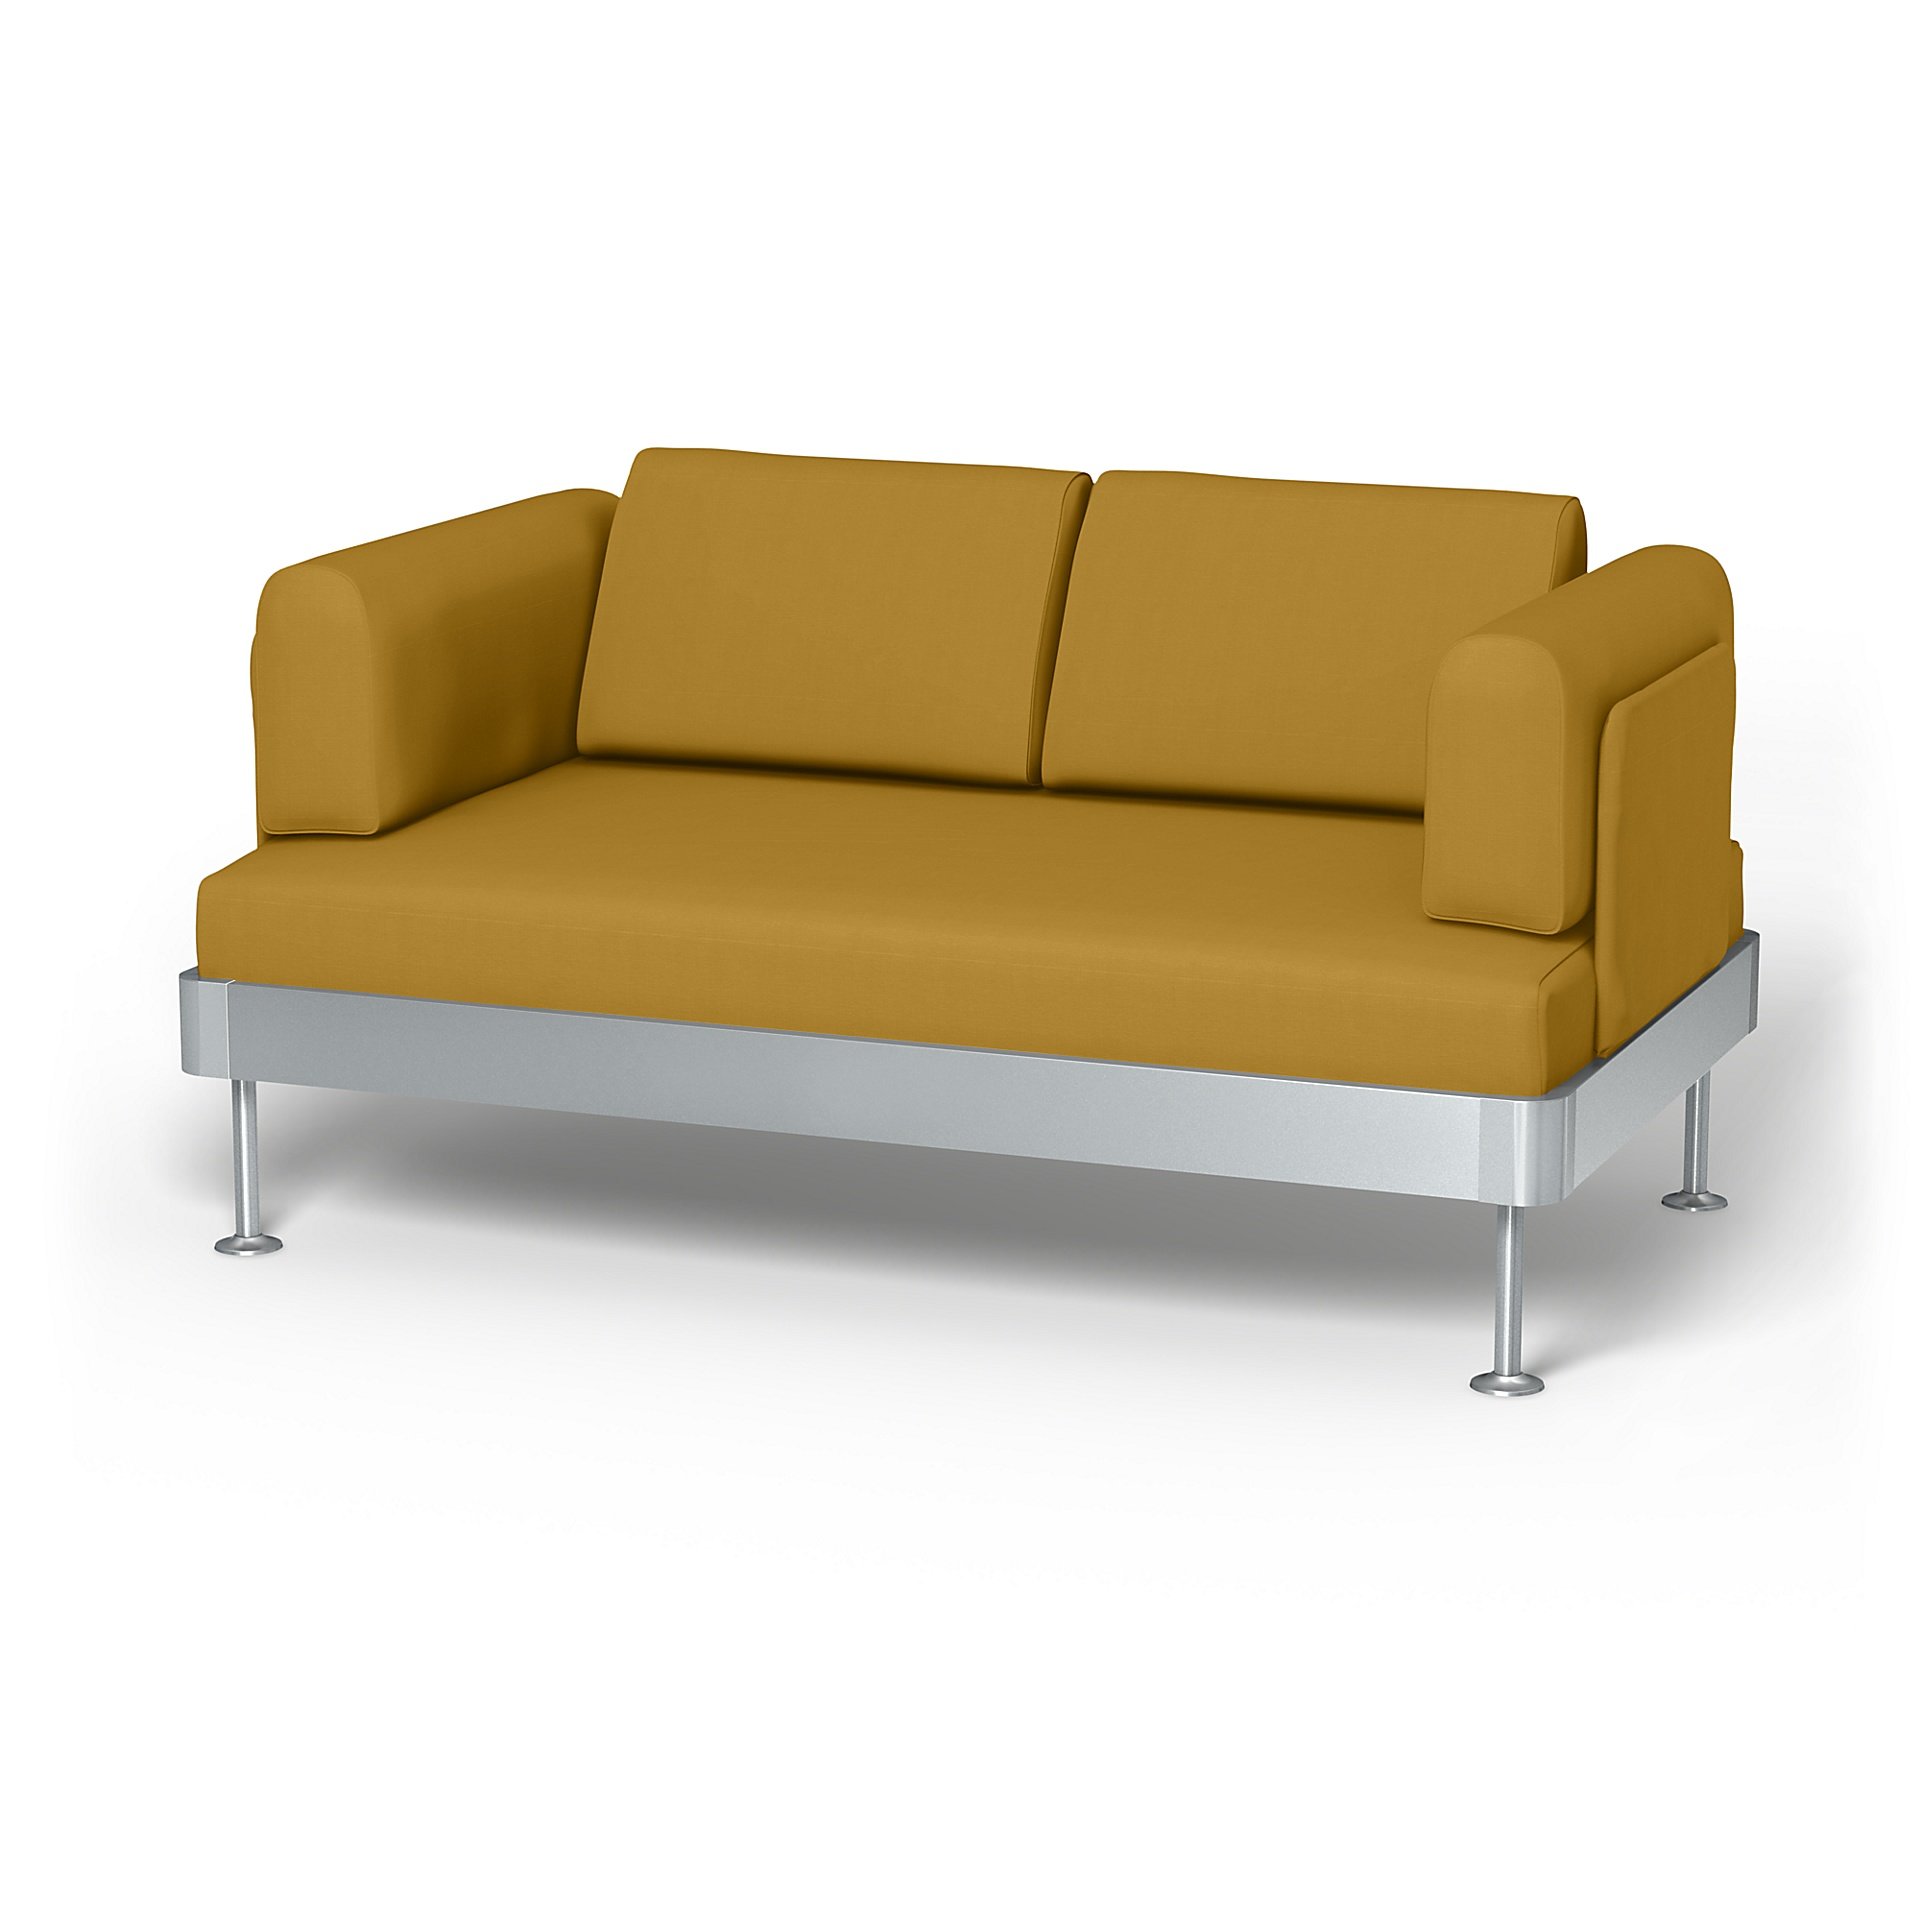 IKEA - Delaktig 2 Seater Sofa Cover, Honey Mustard, Cotton - Bemz